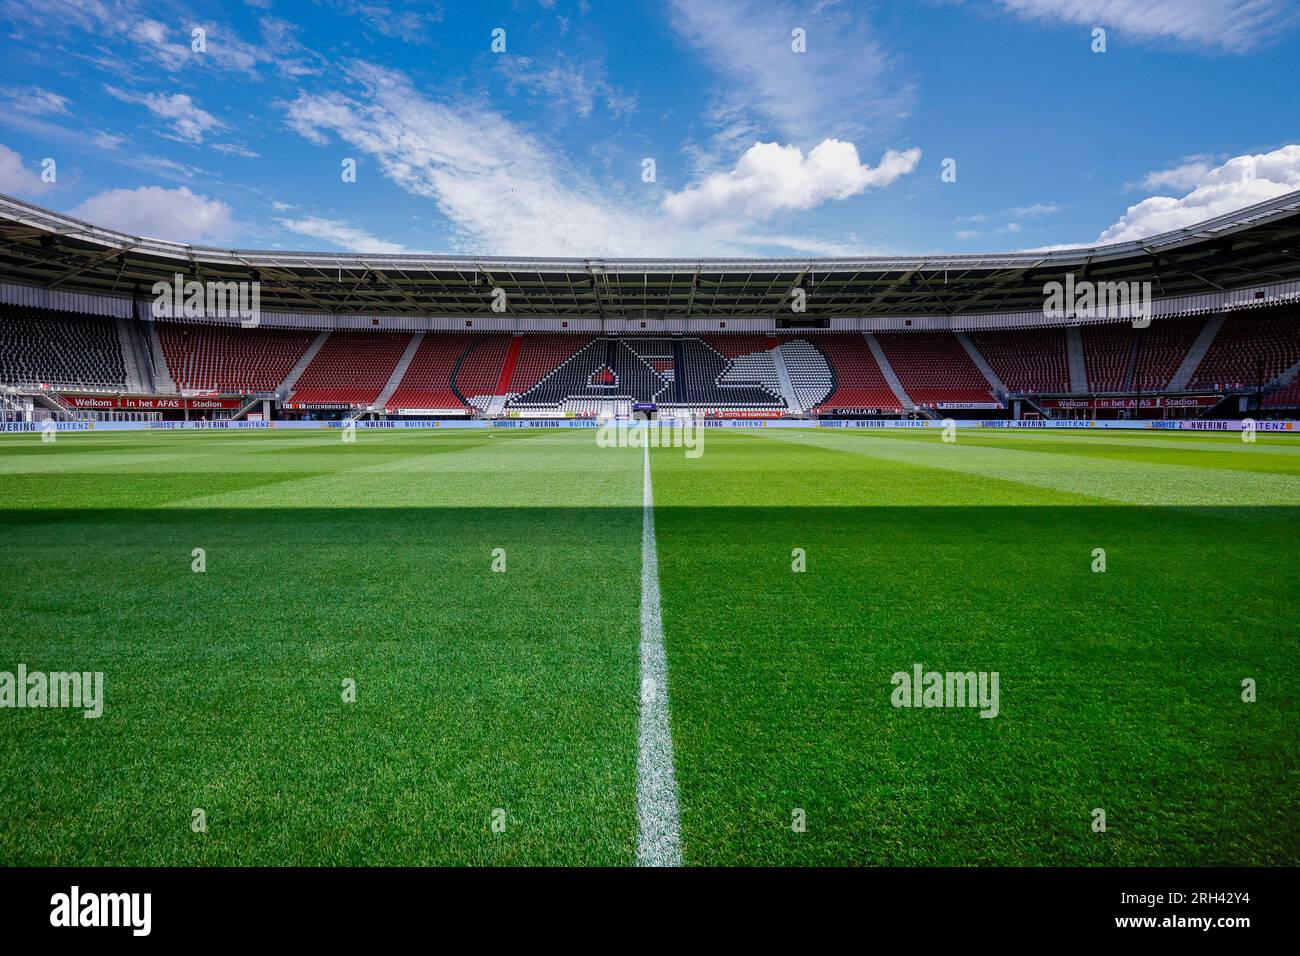 ALKMAAR, NETHERLANDS - AUGUST 13: stadium overview inside during the Eredivisie match of AZ Alkmaar and Go Ahead Eagles at AFAS stadium on August 13, Stock Photo